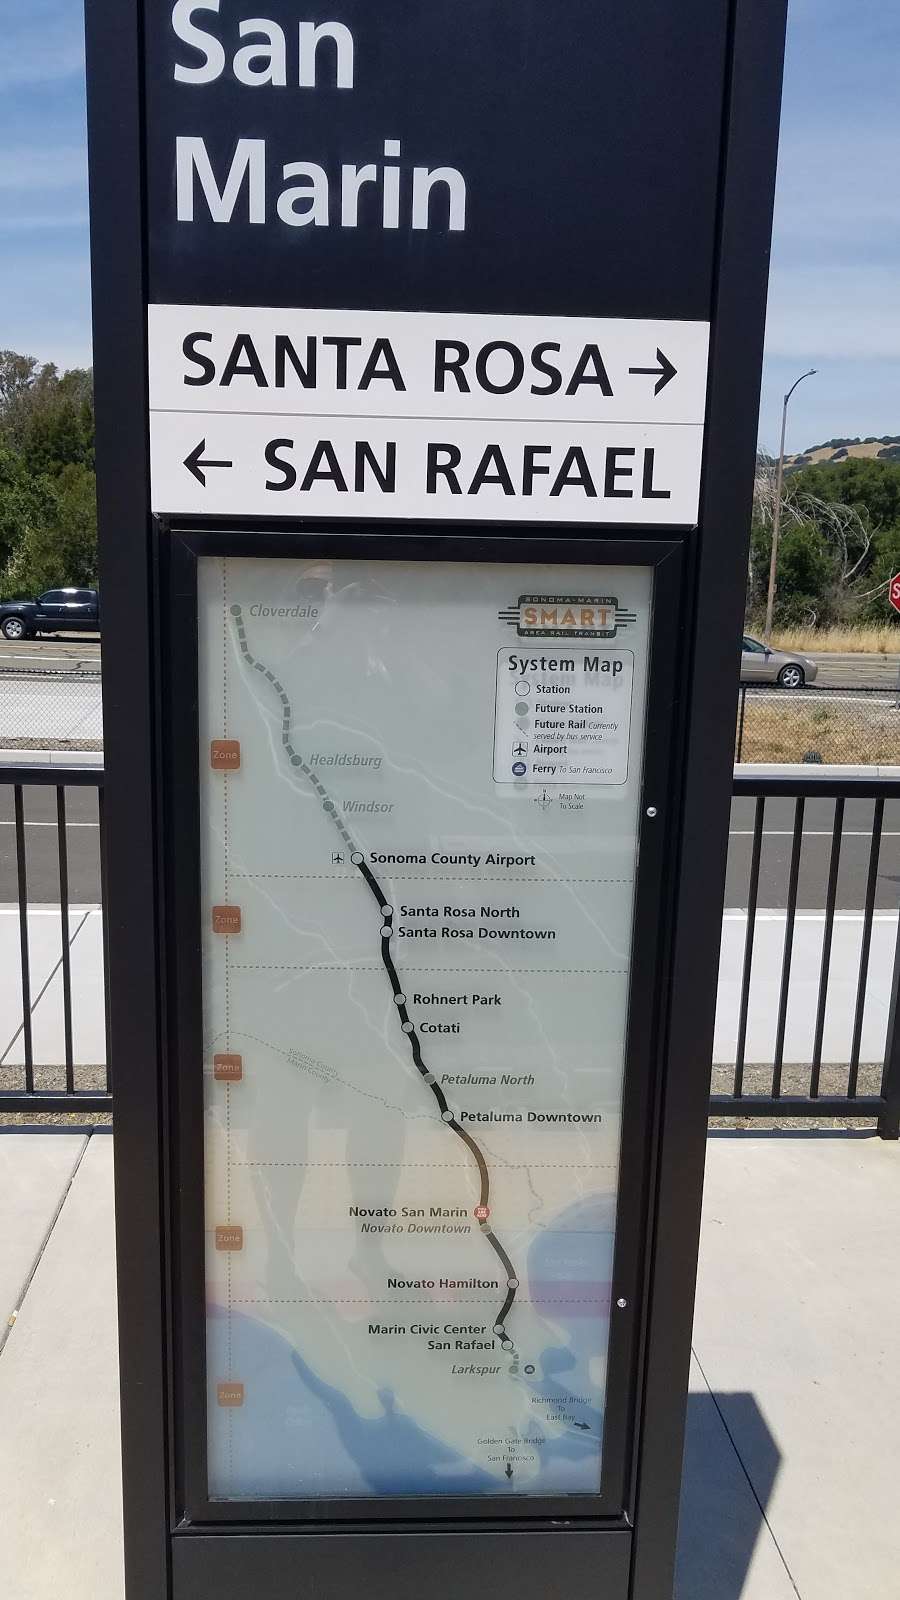 SMART Novato San Marin Station | Novato, CA 94945, USA